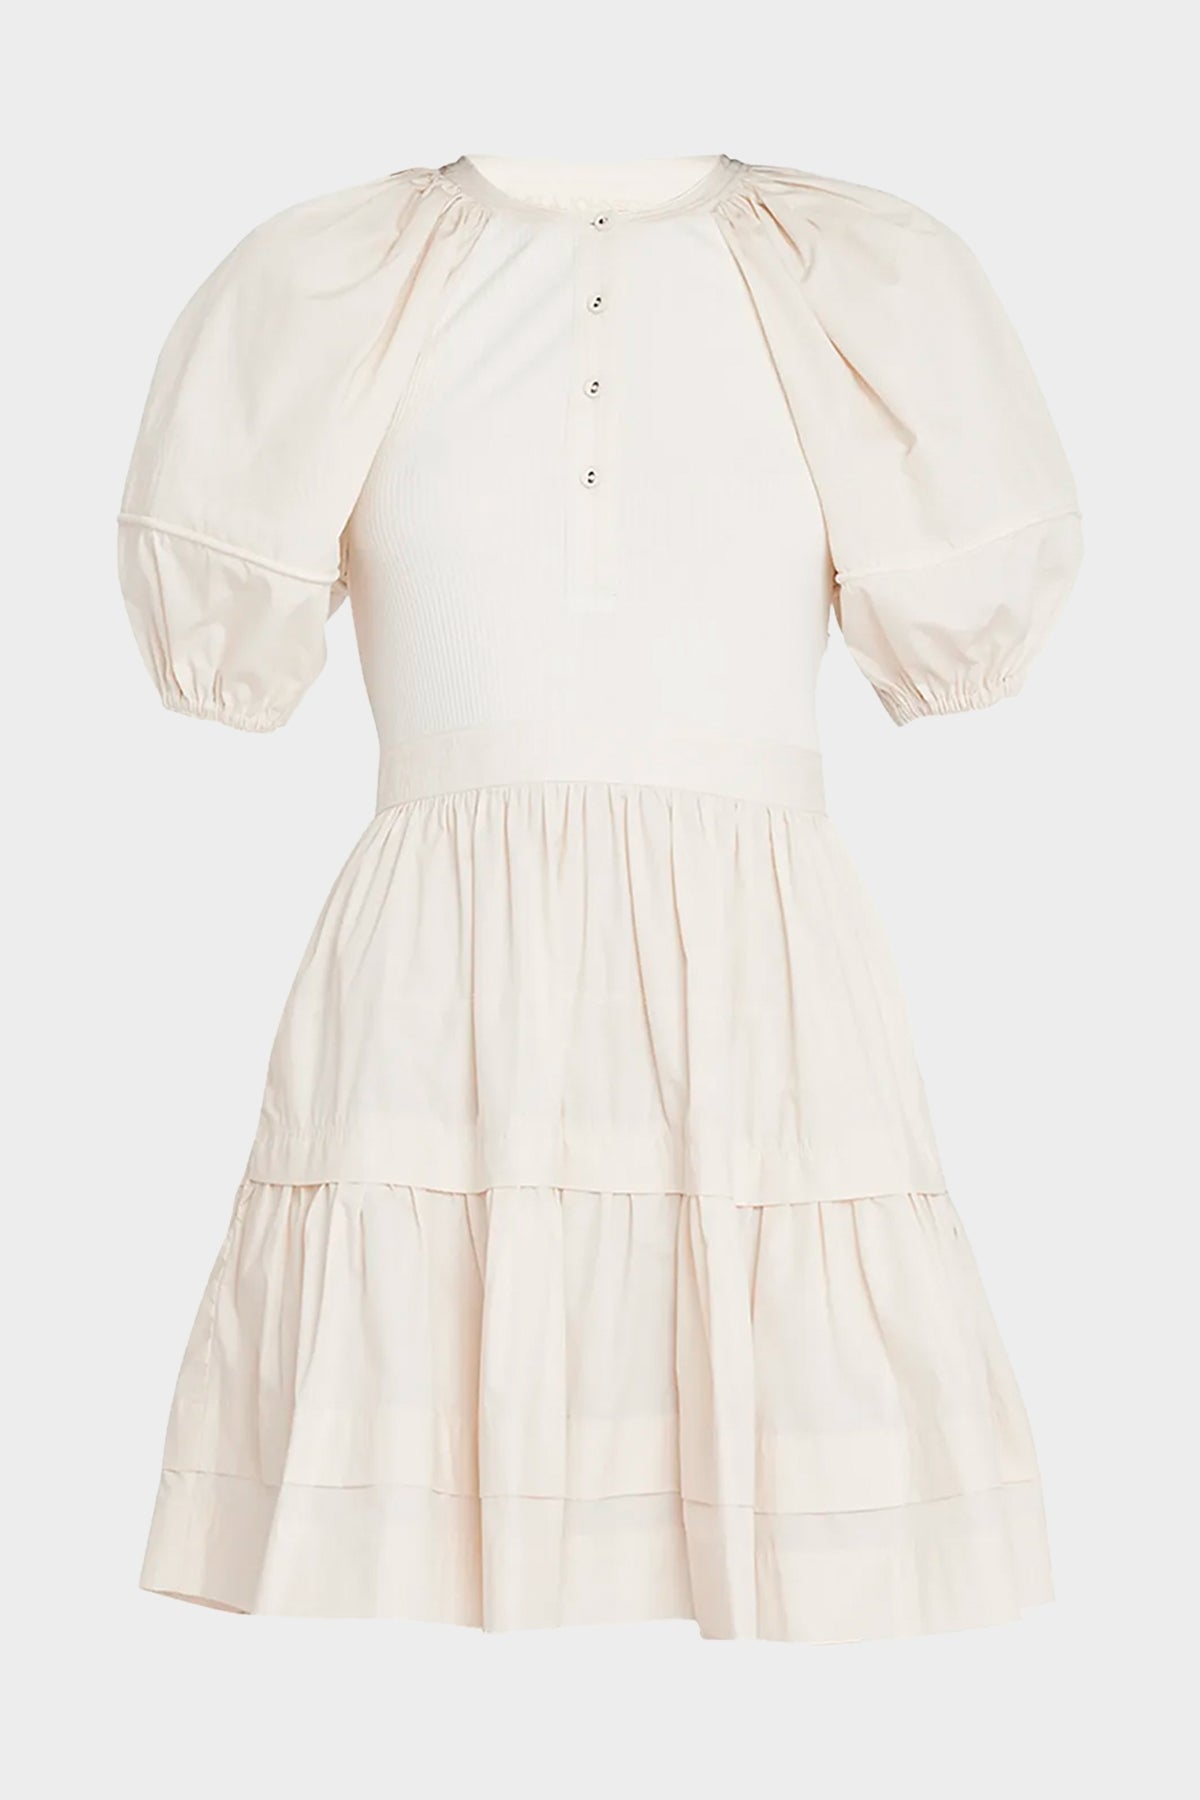 Amelia Mini Dress in Ivory - shop-olivia.com